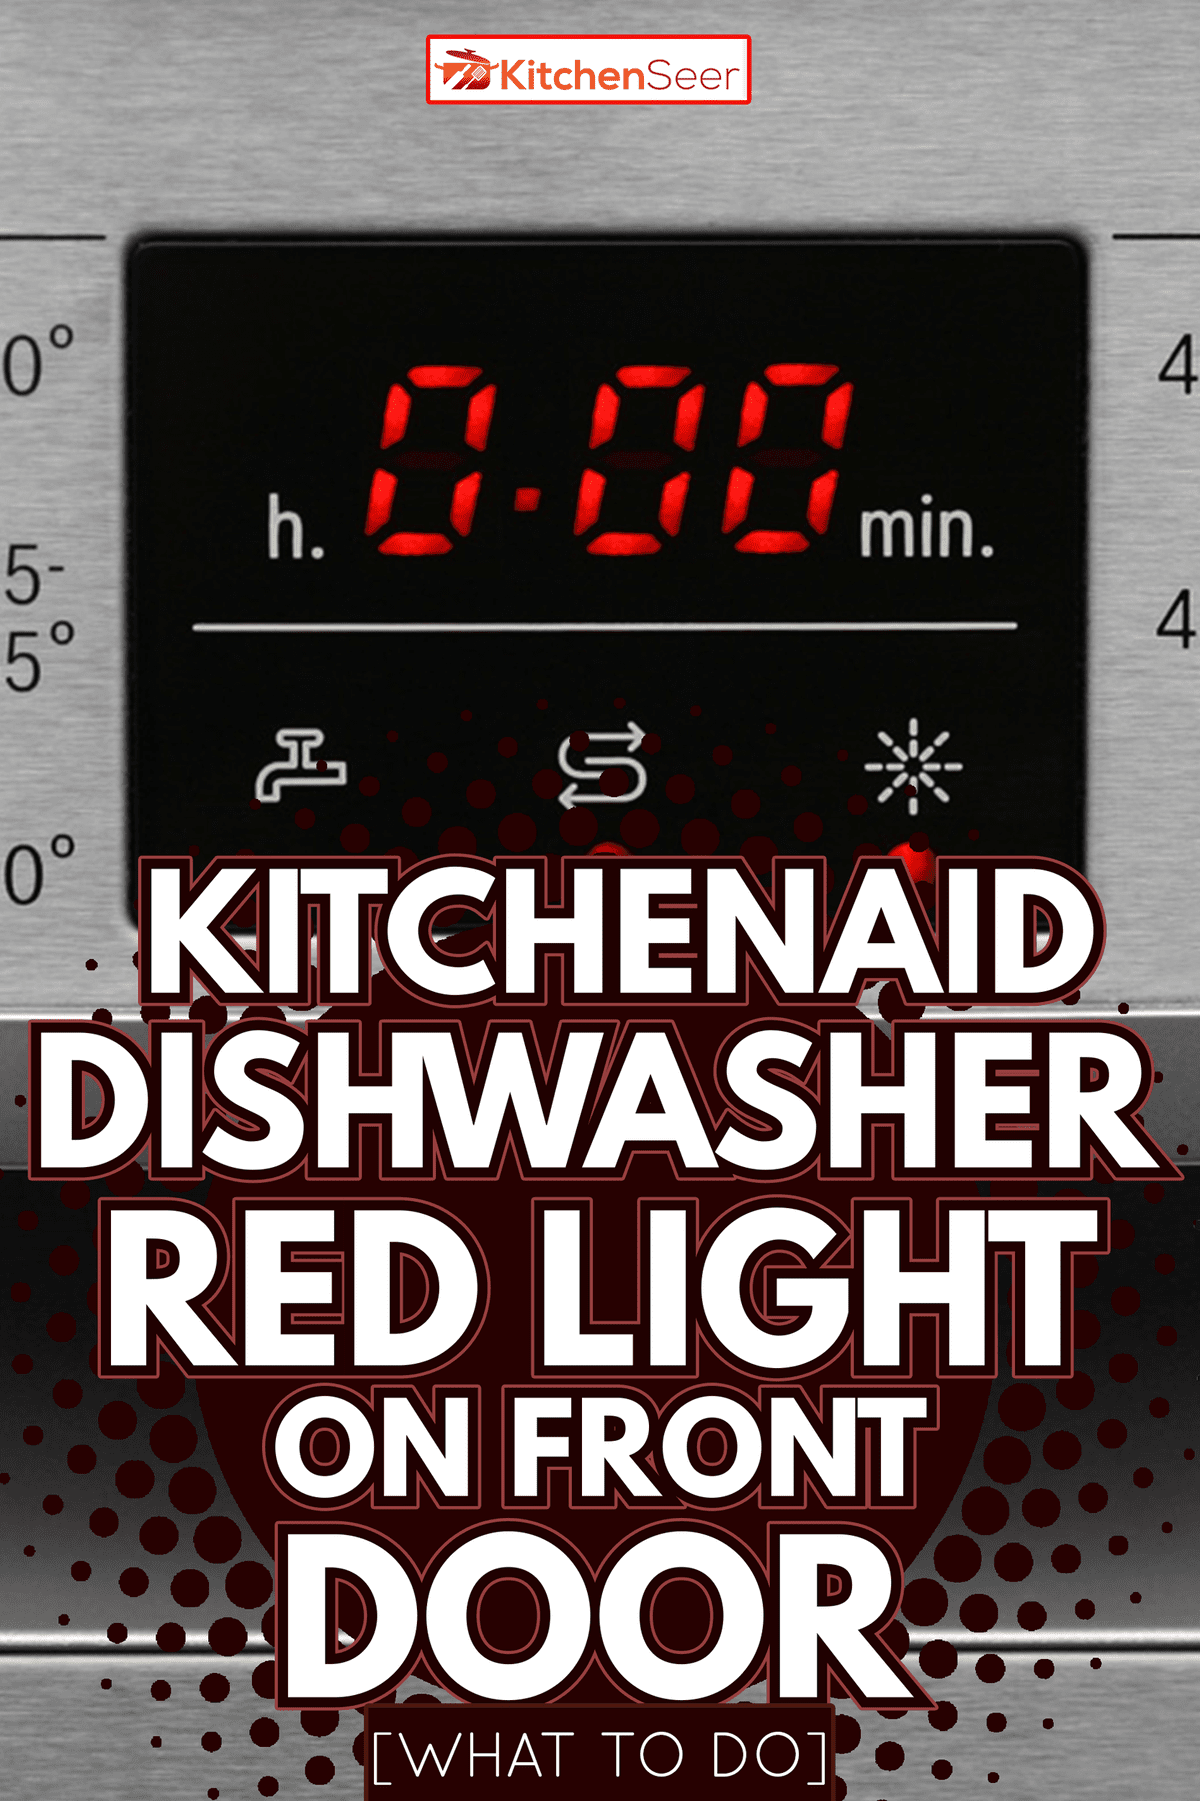 Detail shot of dishwasher panel - KitchenAid Dishwasher Red Light On Front Door - What To Do